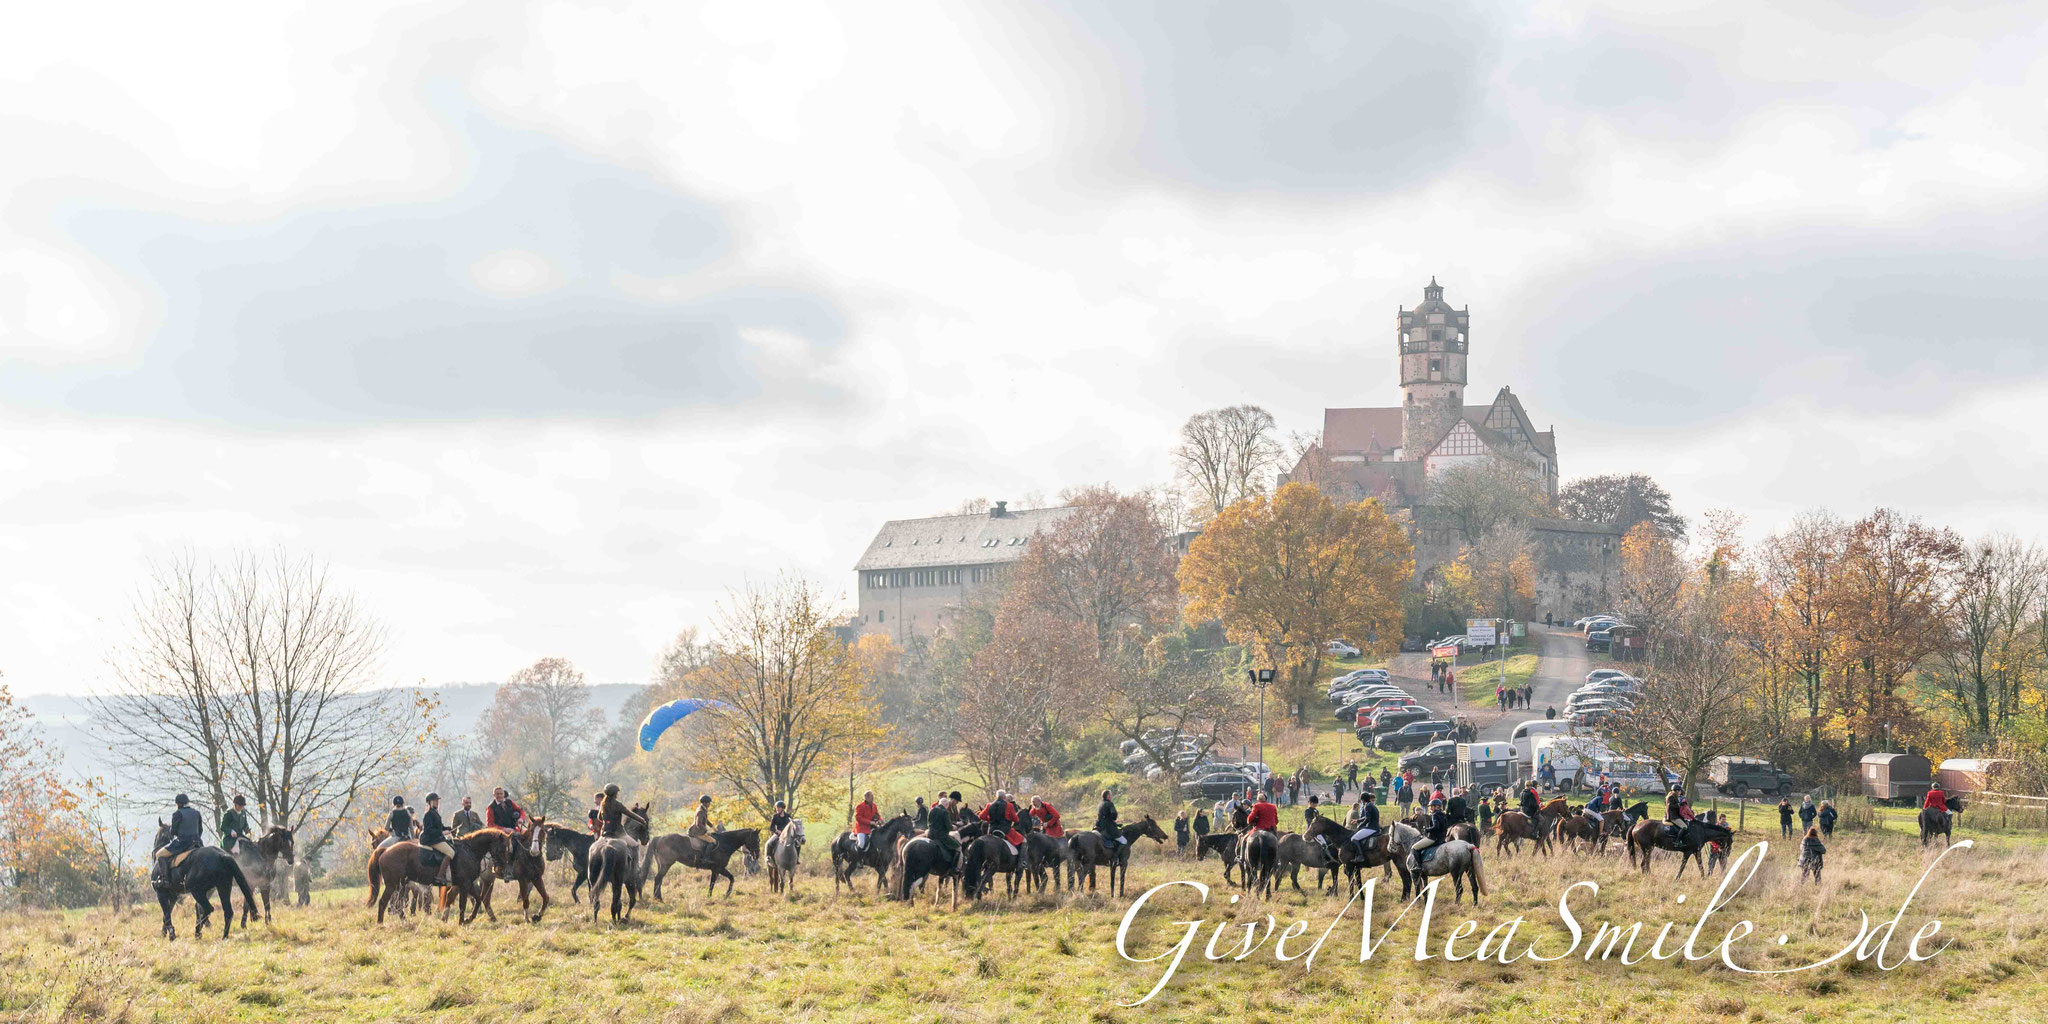 Jagdfotos vom Team @Givemeasmile.de auf der Fotojagd, Peter Jäger  #givemeasmilede #Taunusmeute #Ronneburg #foxhounds #beagles #jagdreiten #schleppjagd